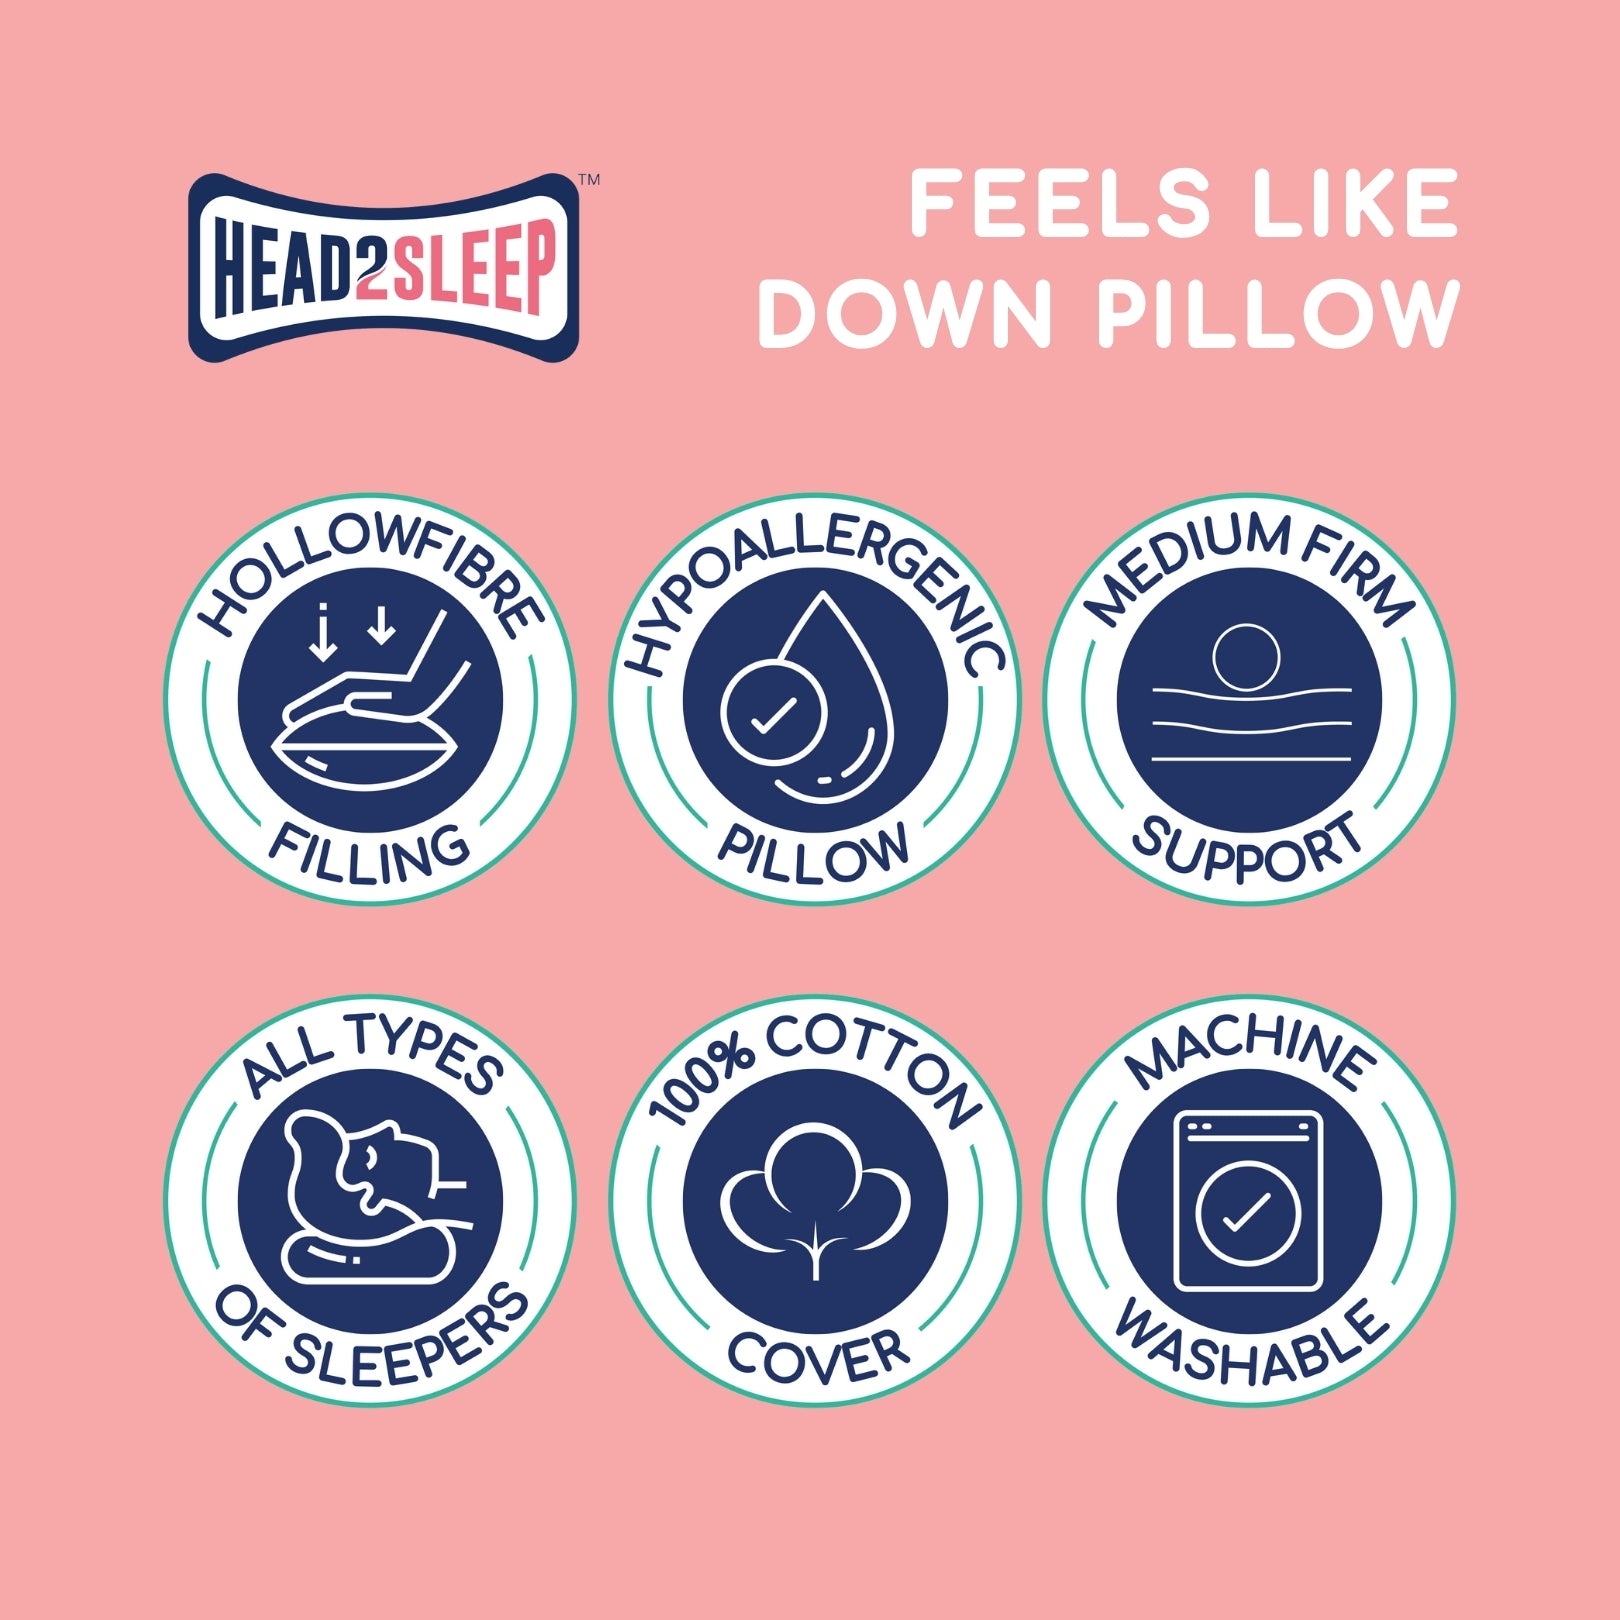 Head2Sleep Feels Like Down Pillow